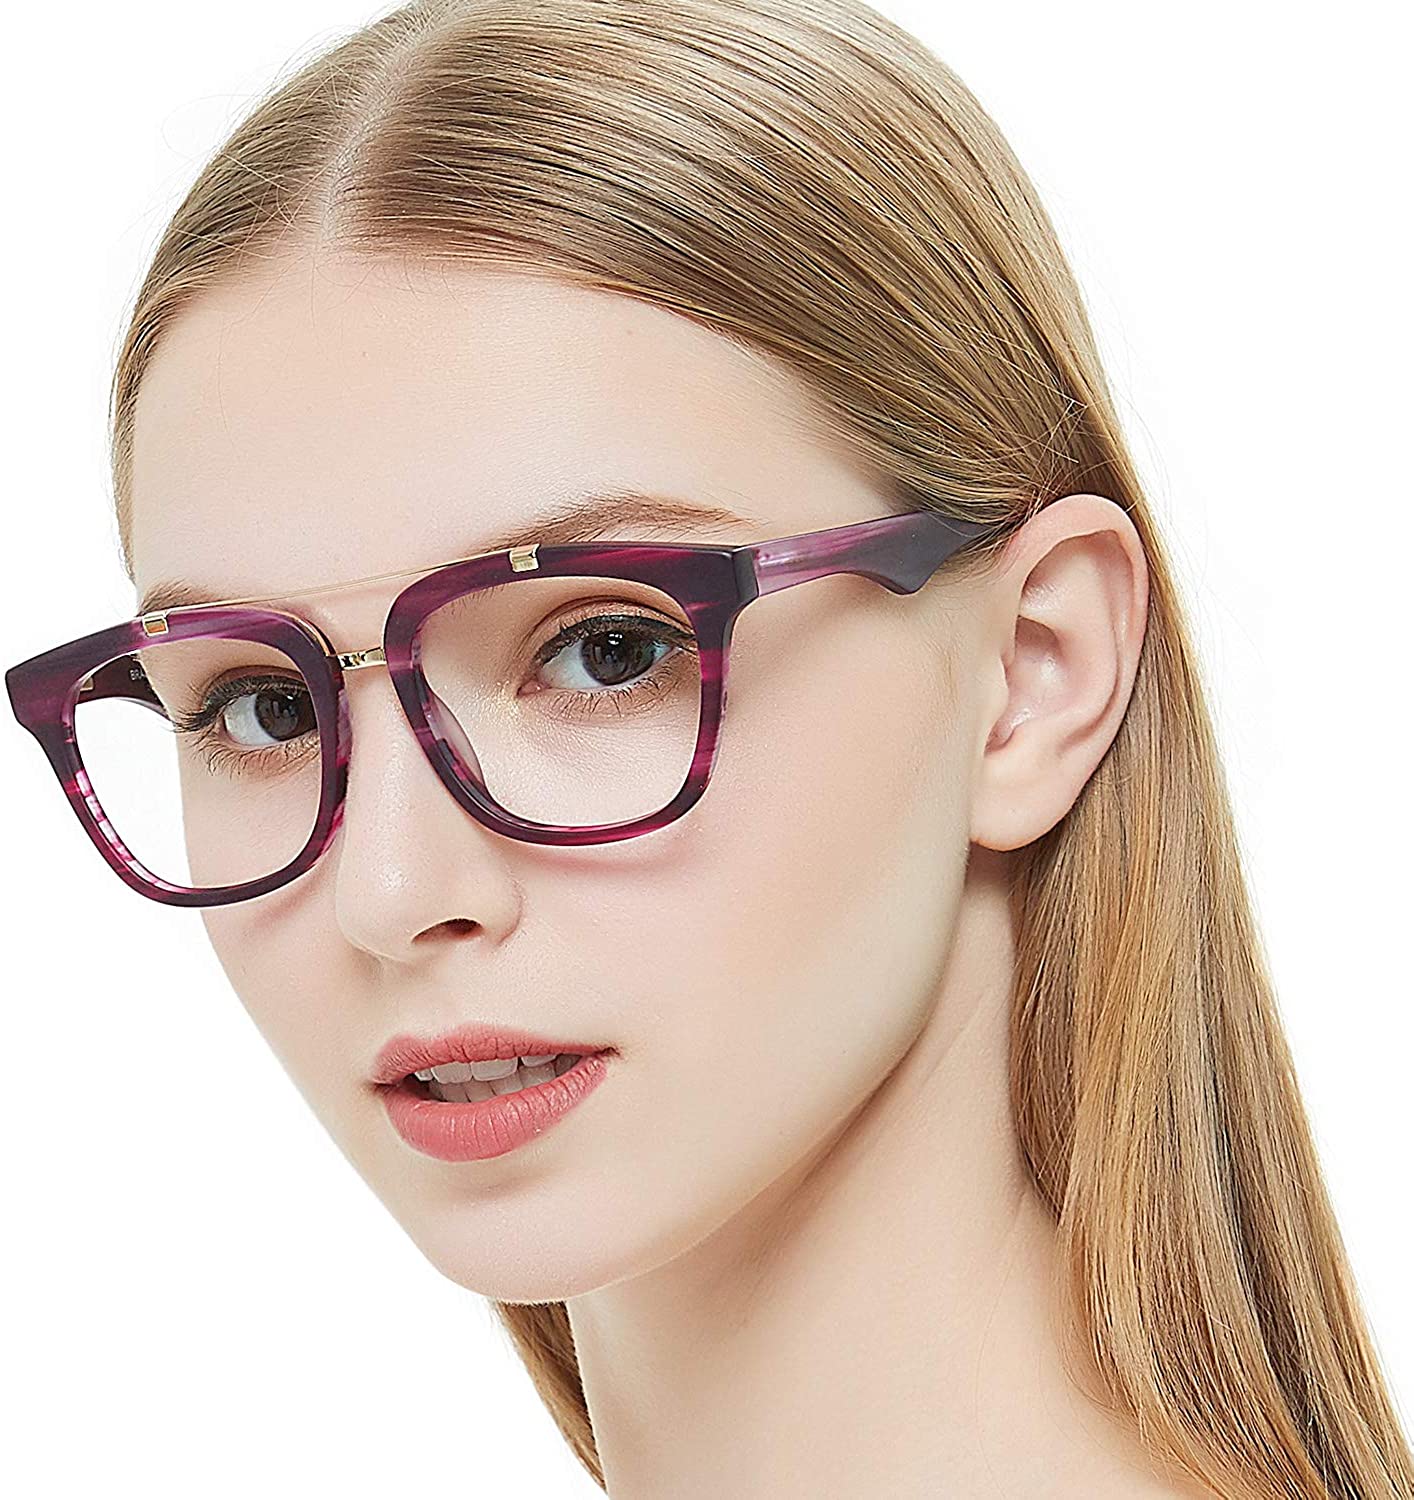 Womens Aviator Fashion Prescription Eyeglasses Frame